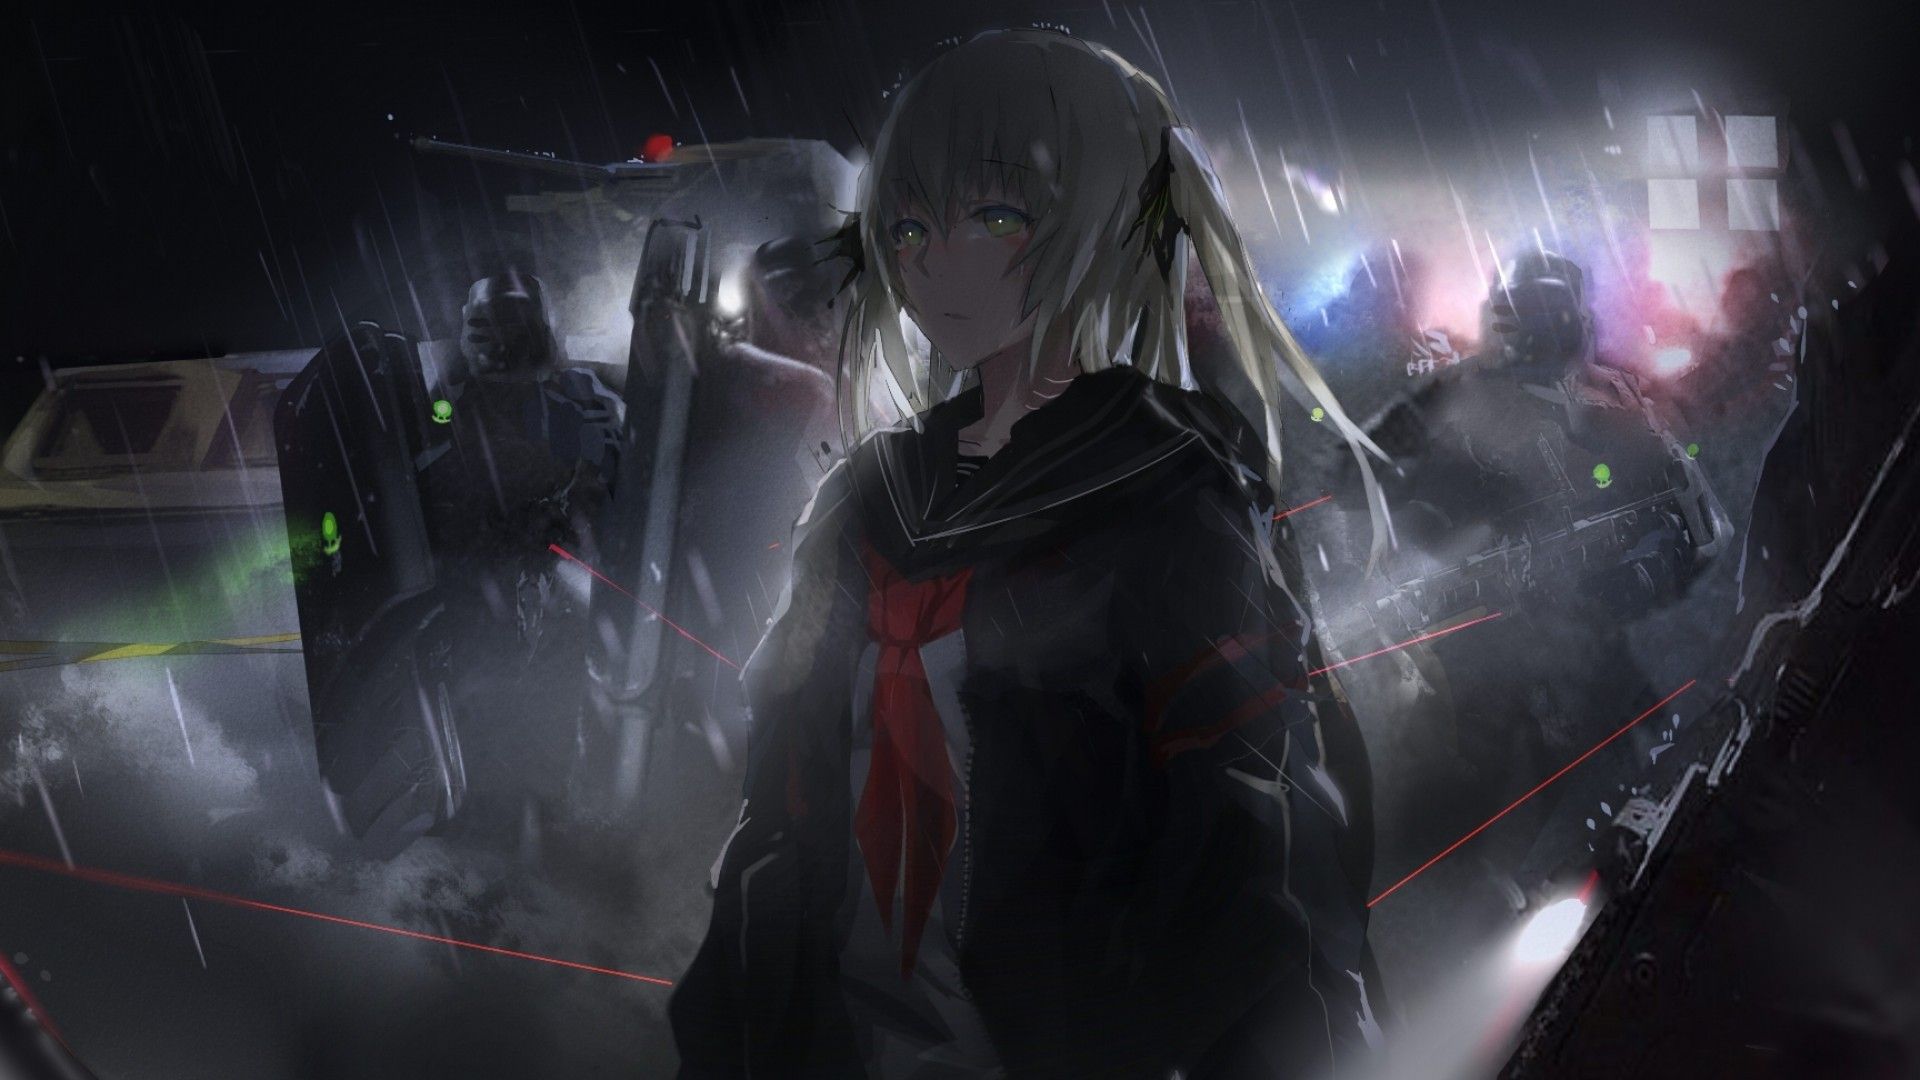 Download 1920x1080 Anime Girl, Soldiers, Raining, Dark Theme, Guns